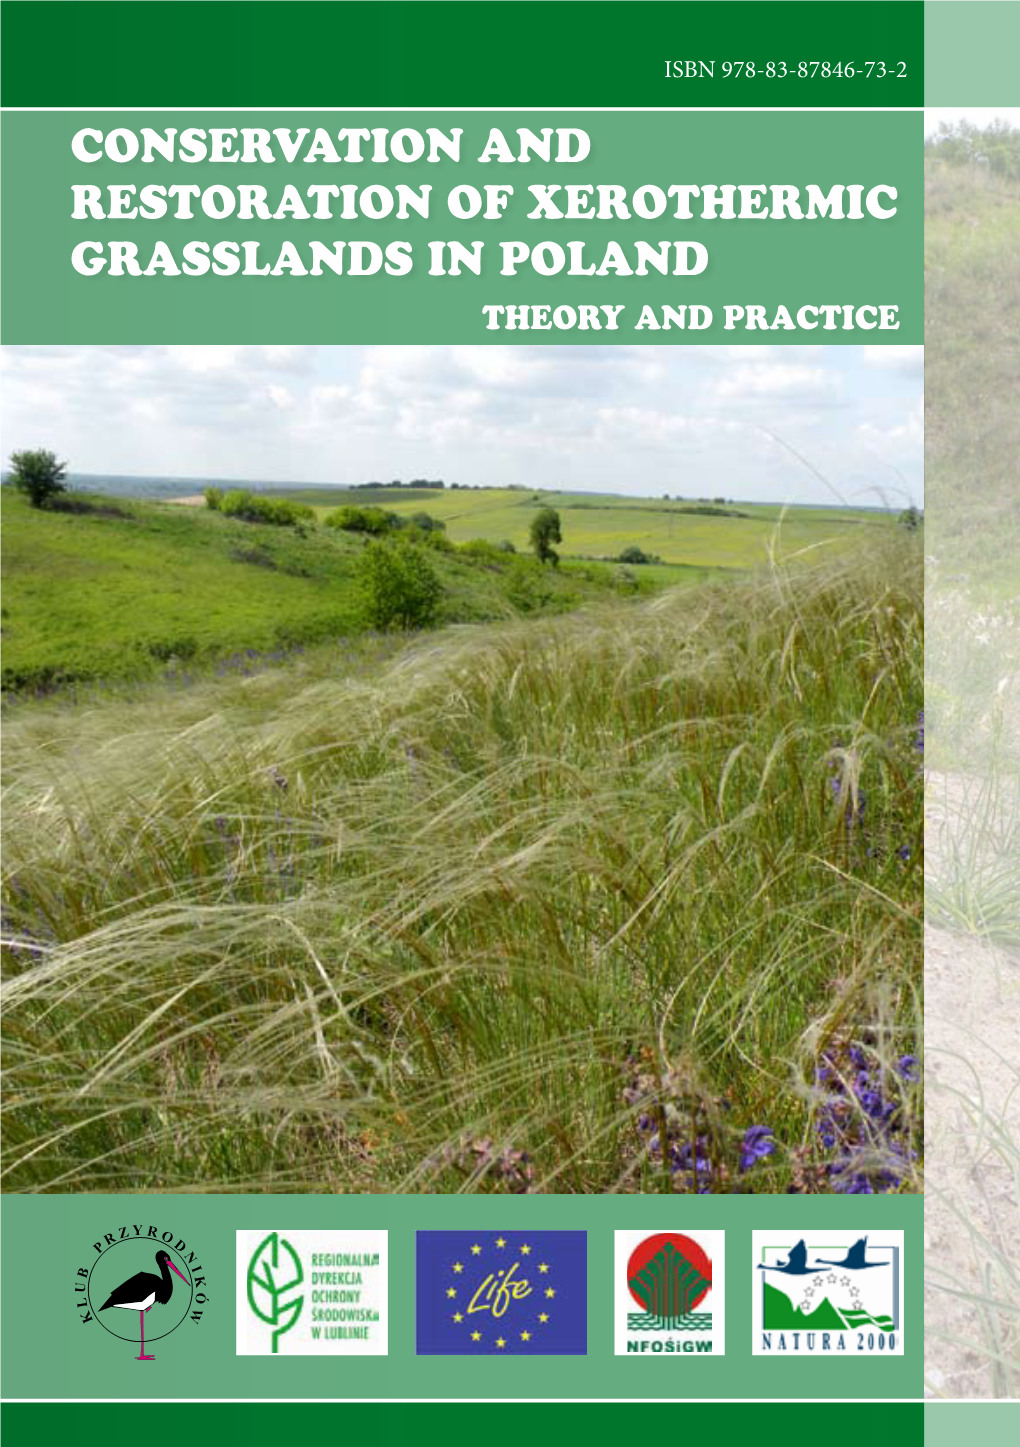 CONSERVATION and RESTORATION of XEROTHERMIC GRASSLANDS in POLAND THEORY and PRACTICE Authors: Katarzyna Barańska, Piotr Chmielewski, Anna Cwener, Paweł Pluciński